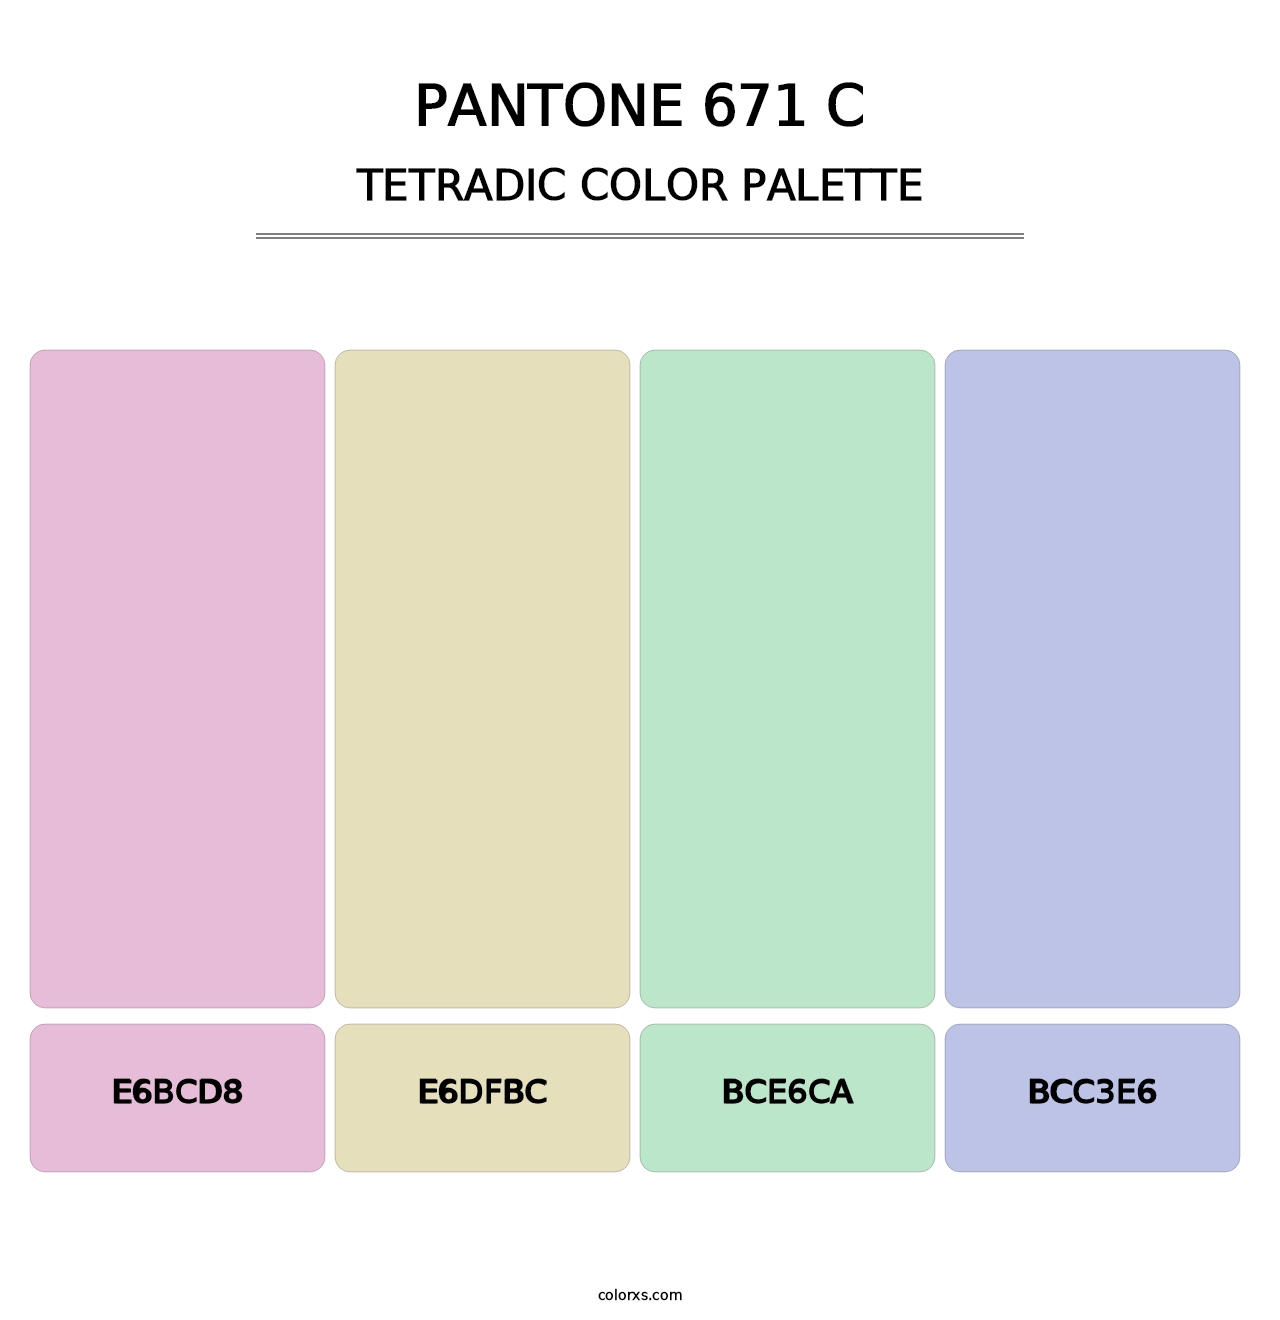 PANTONE 671 C - Tetradic Color Palette